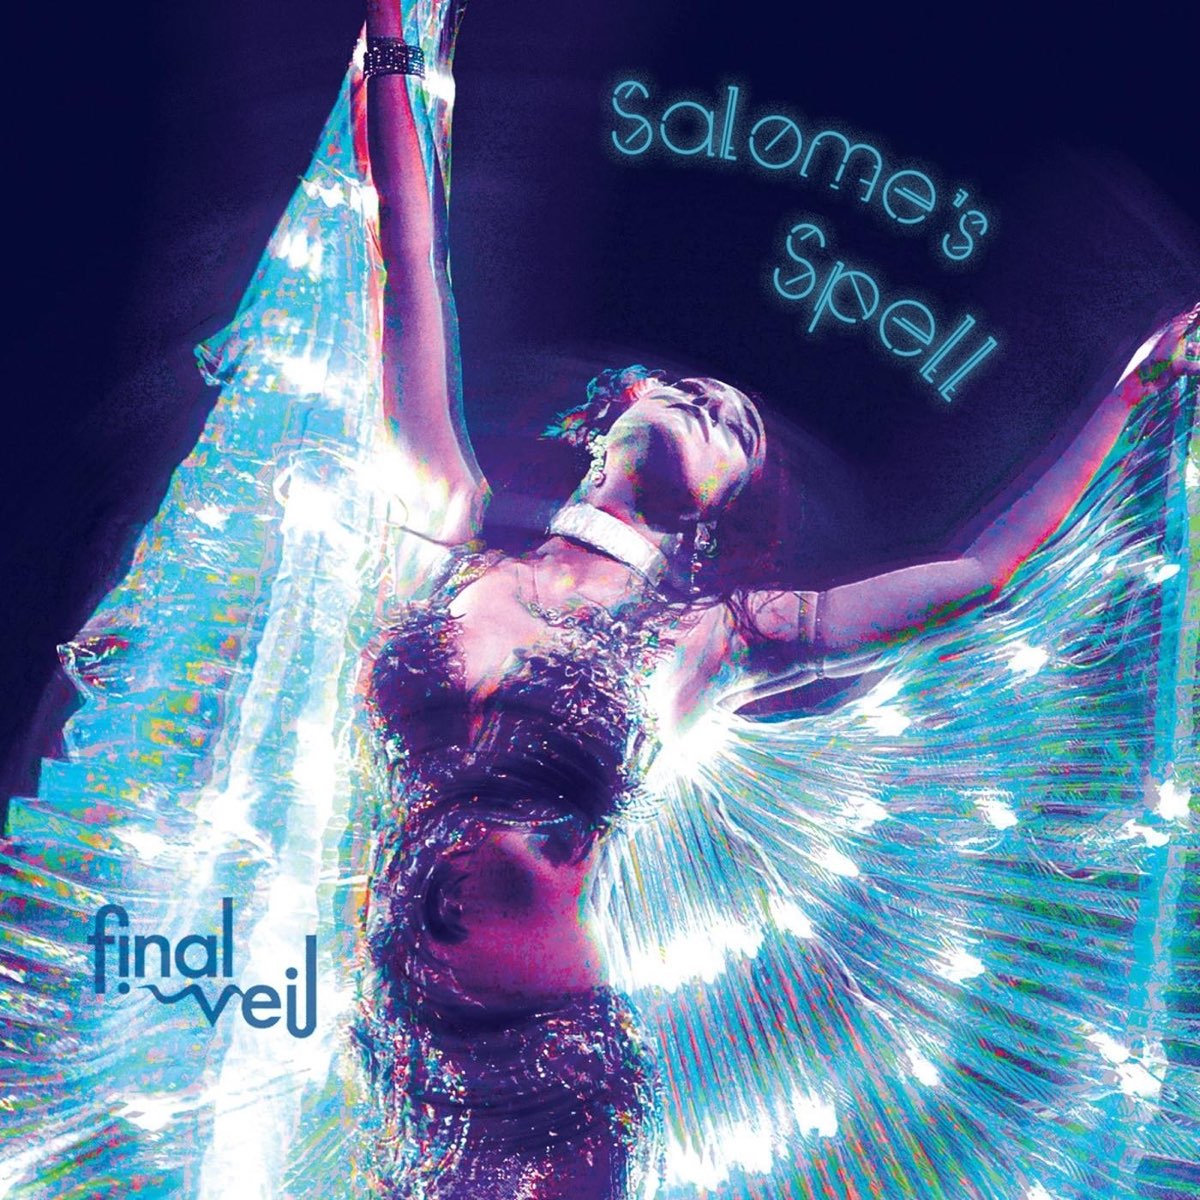 Soul final. Queen Salome. Salome DJ.